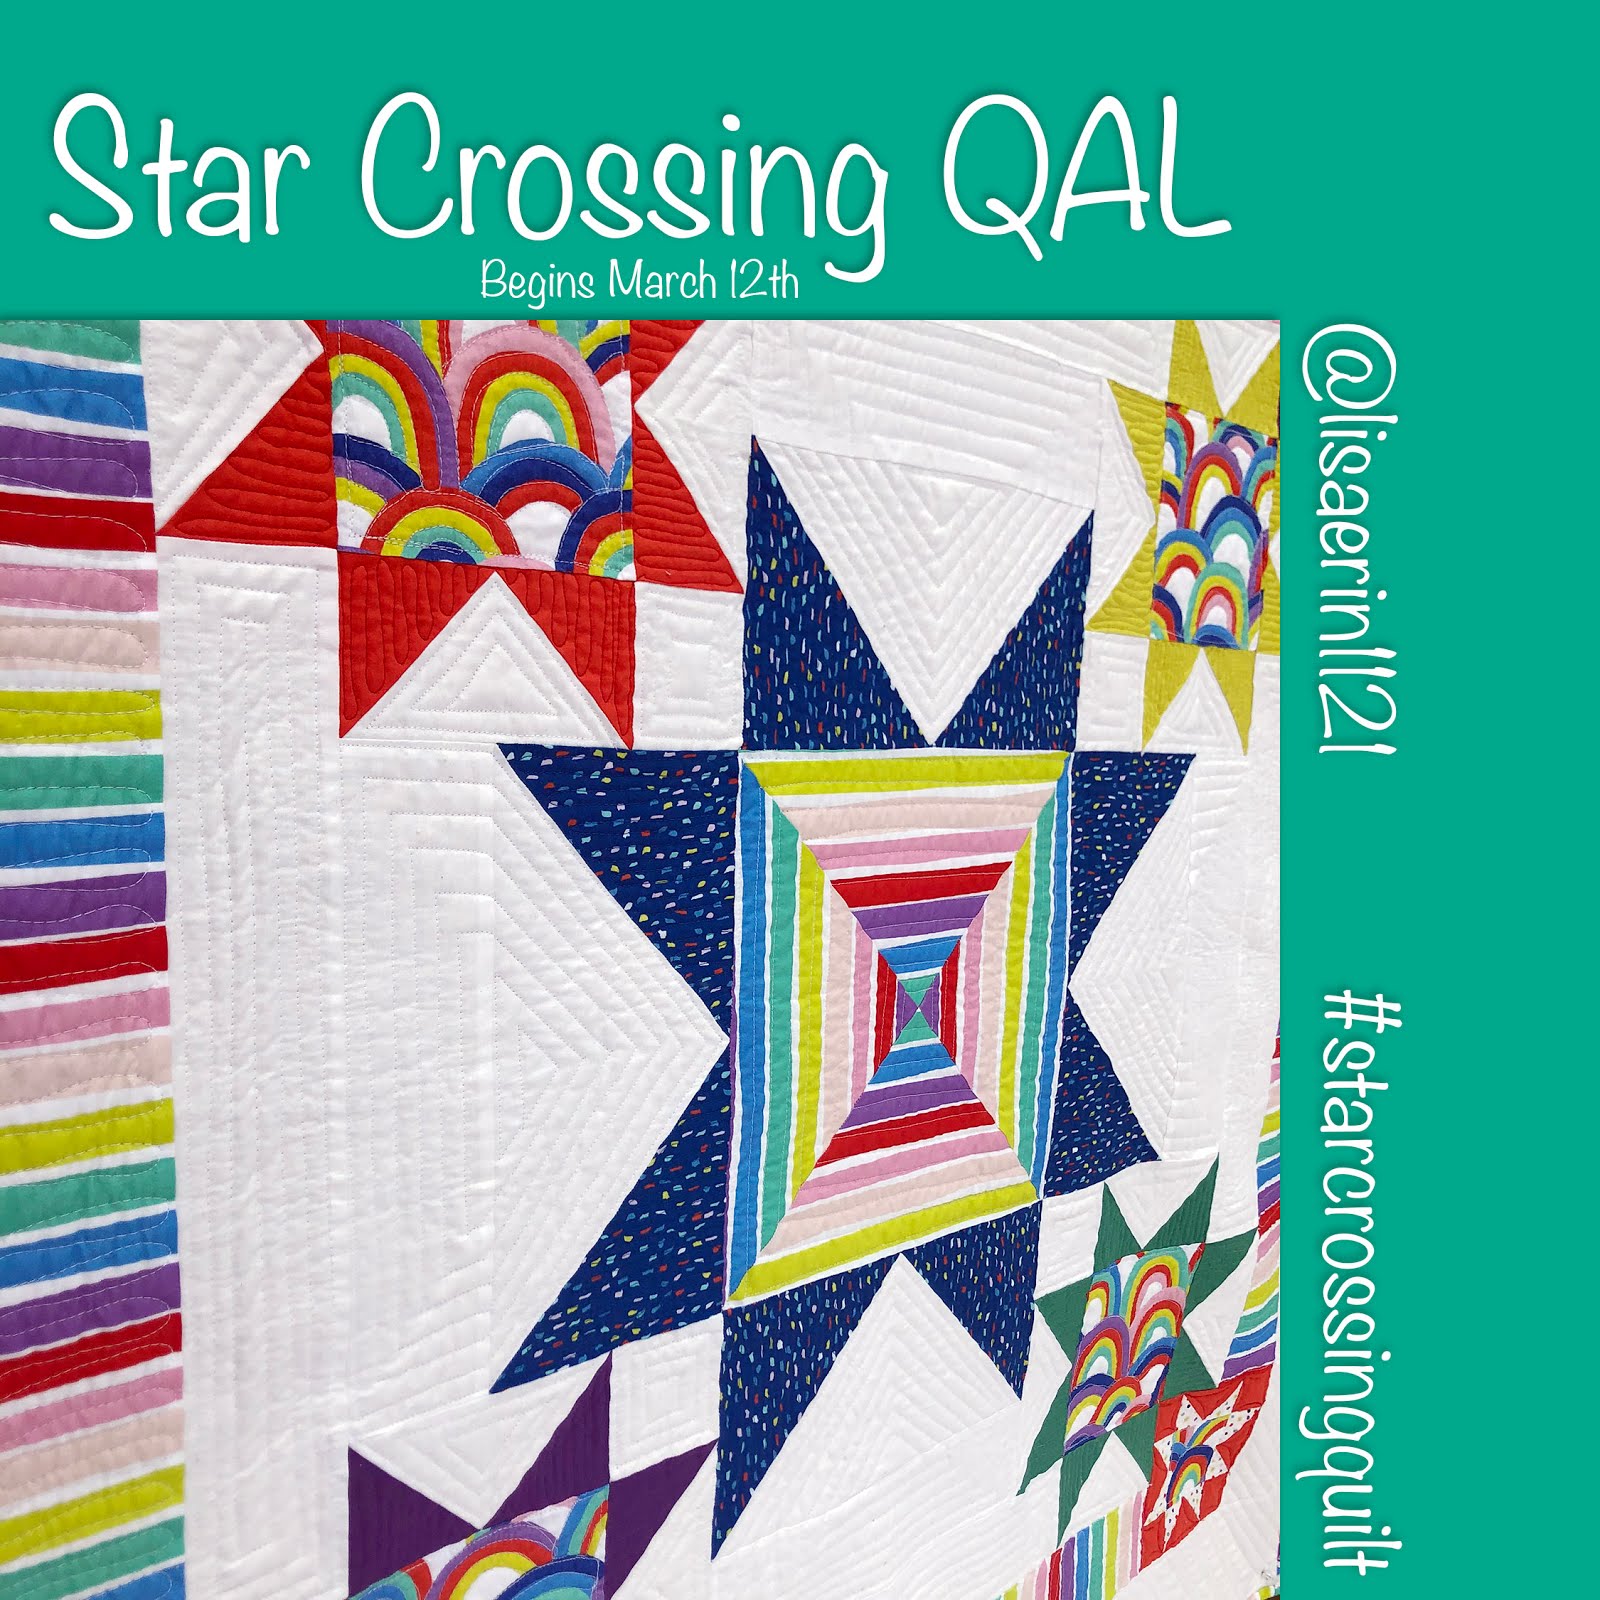 Star Crossing QAL